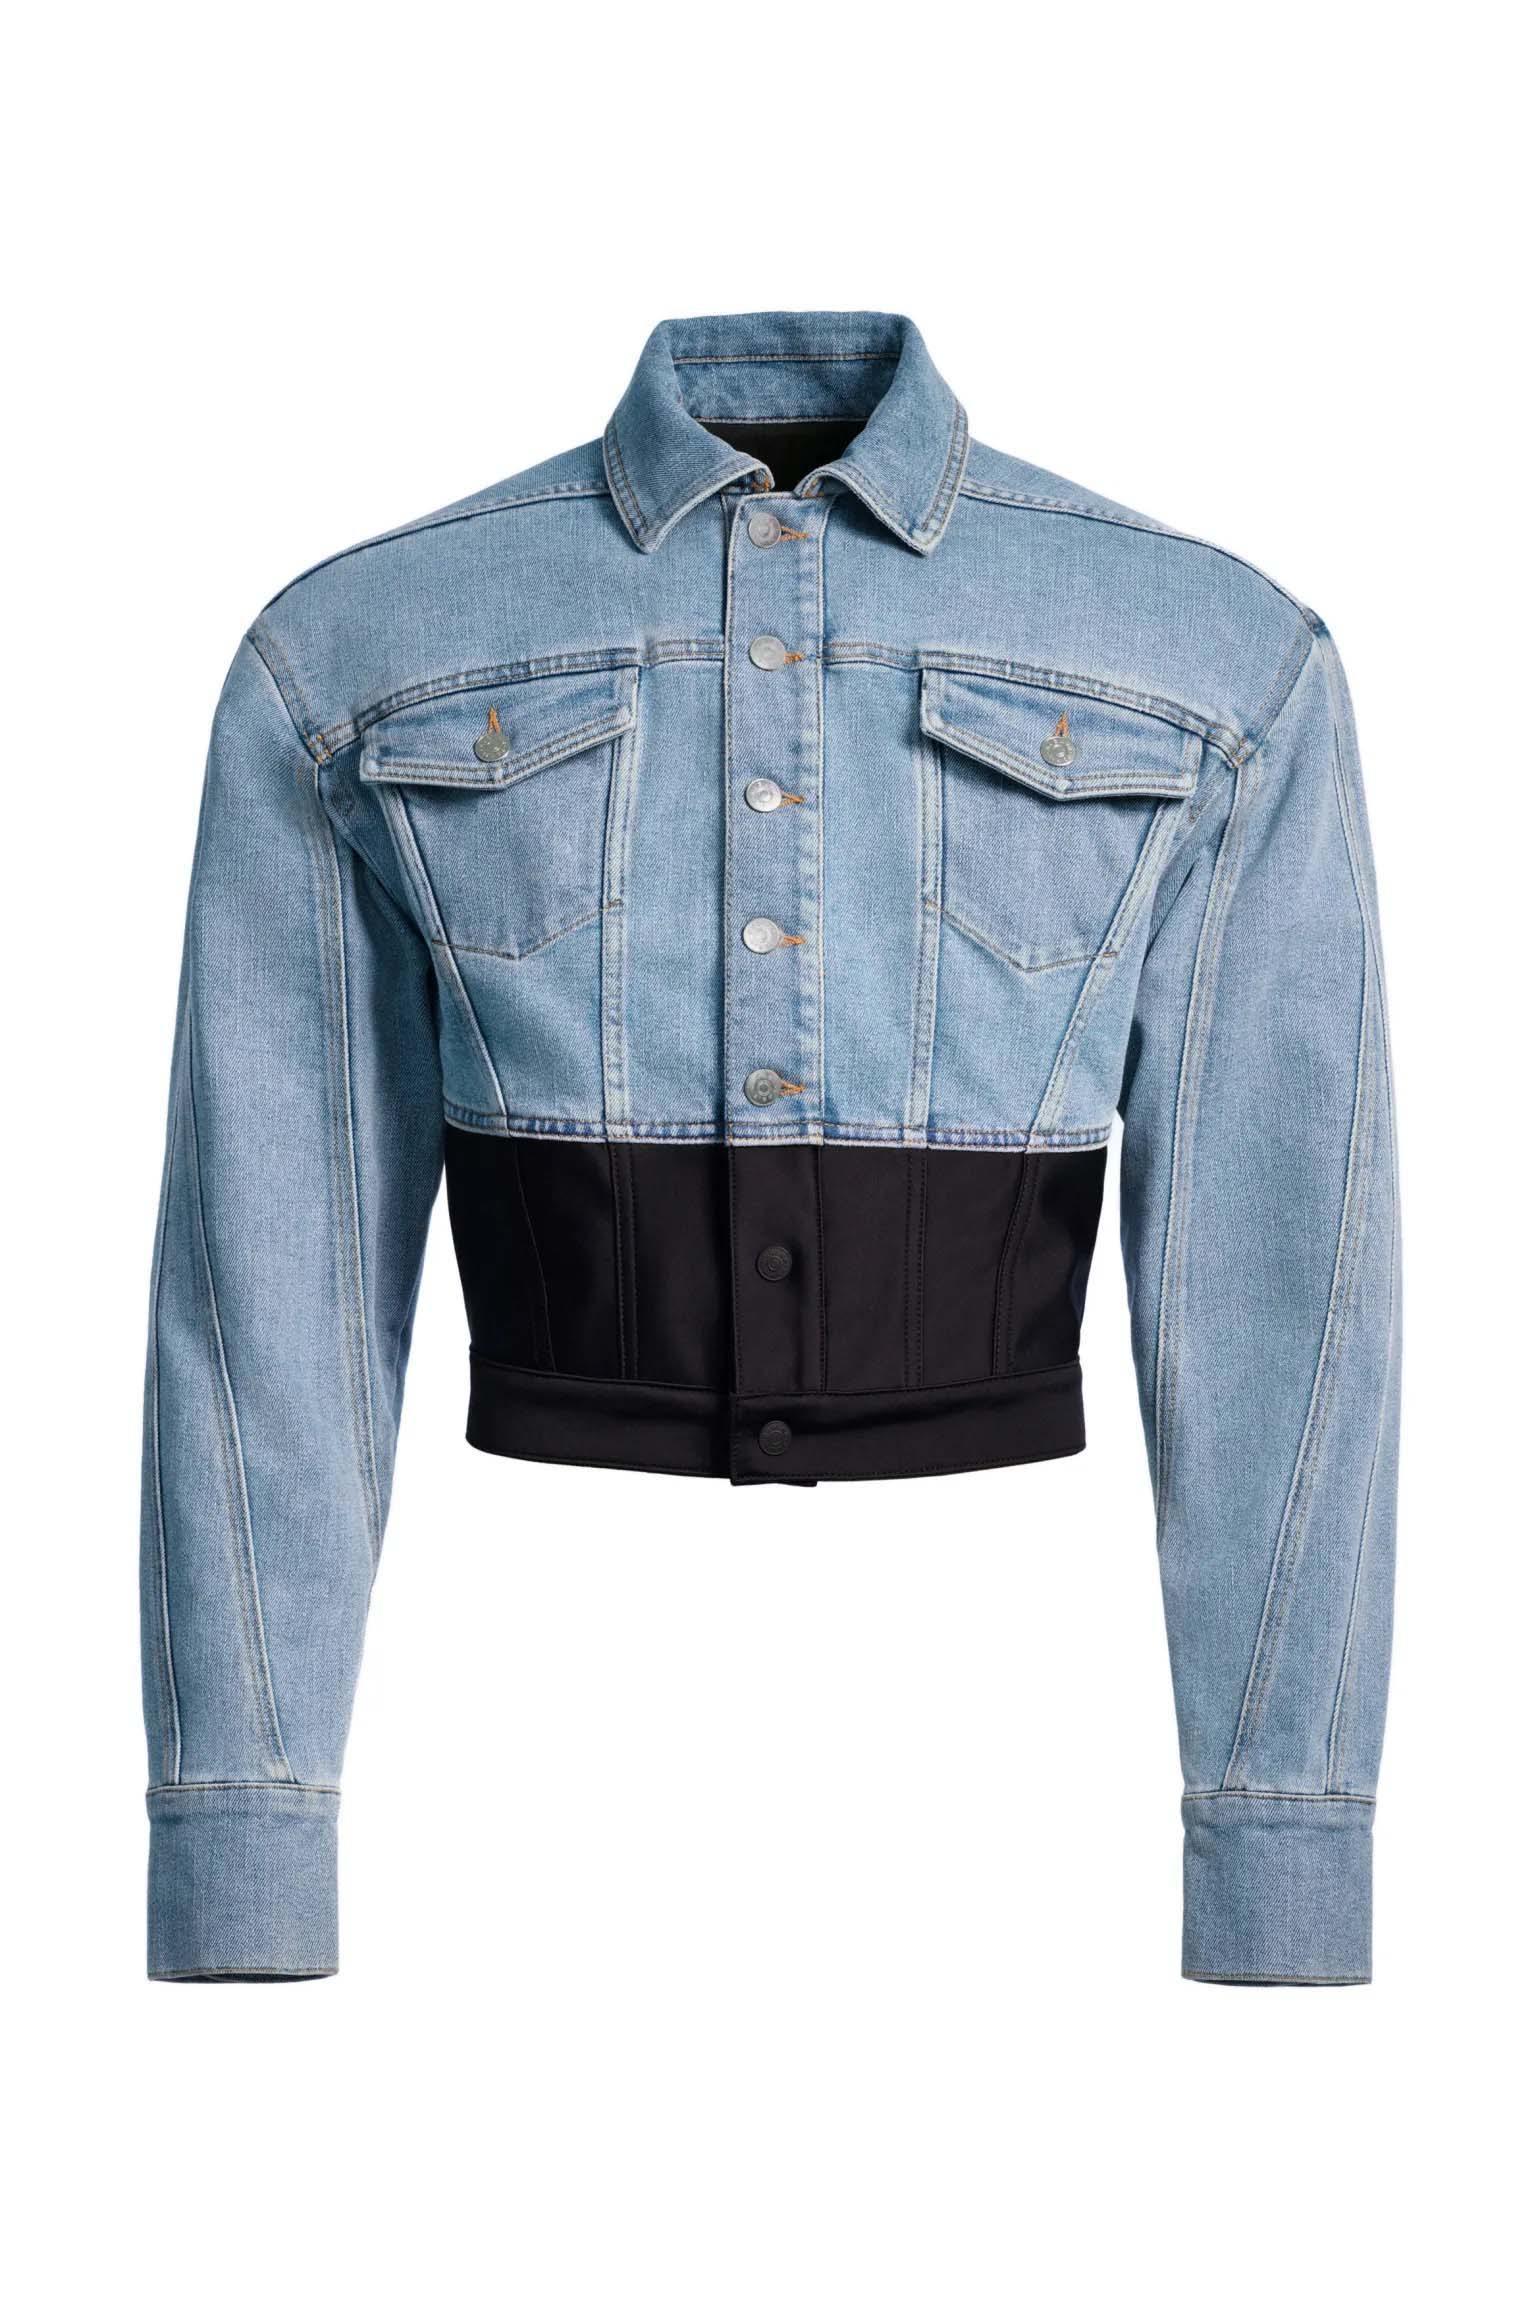 Mugler H&M Defined-Waist Denim Jacket (Mens) Light Denim Blue/Black